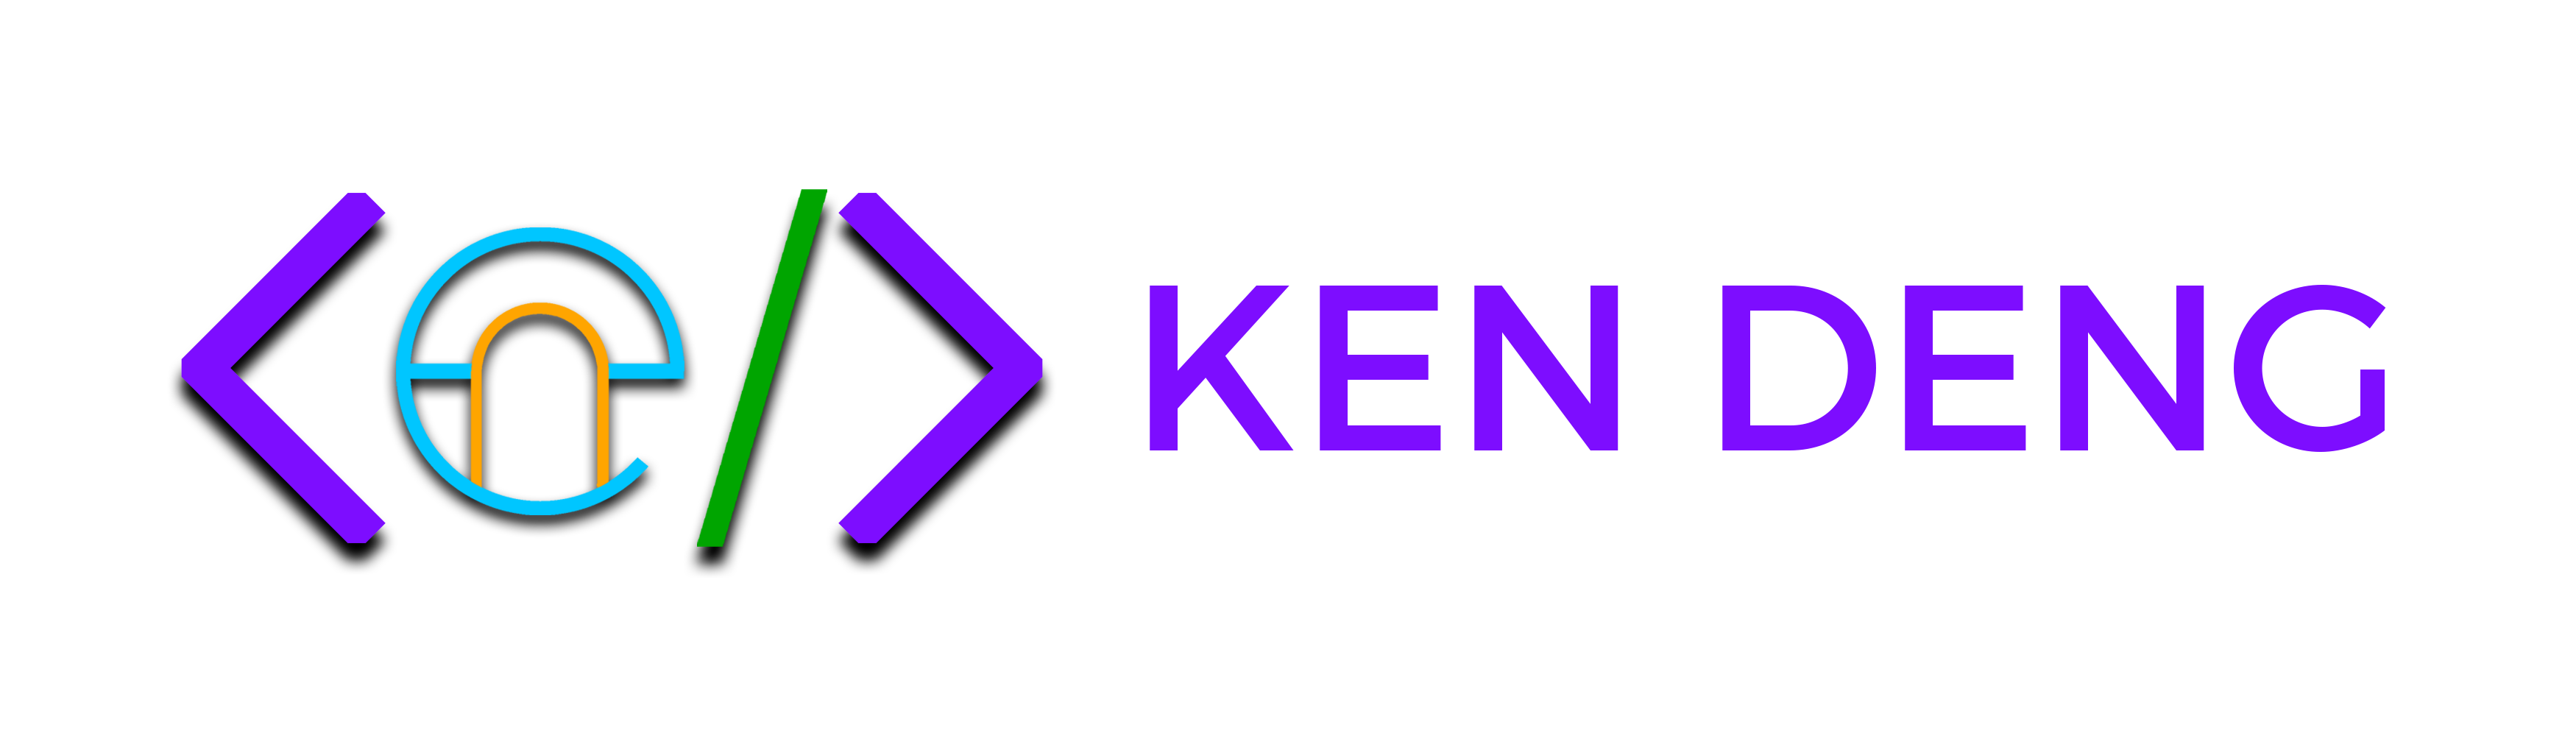 Ken Deng Logo 2019 Full Transparent